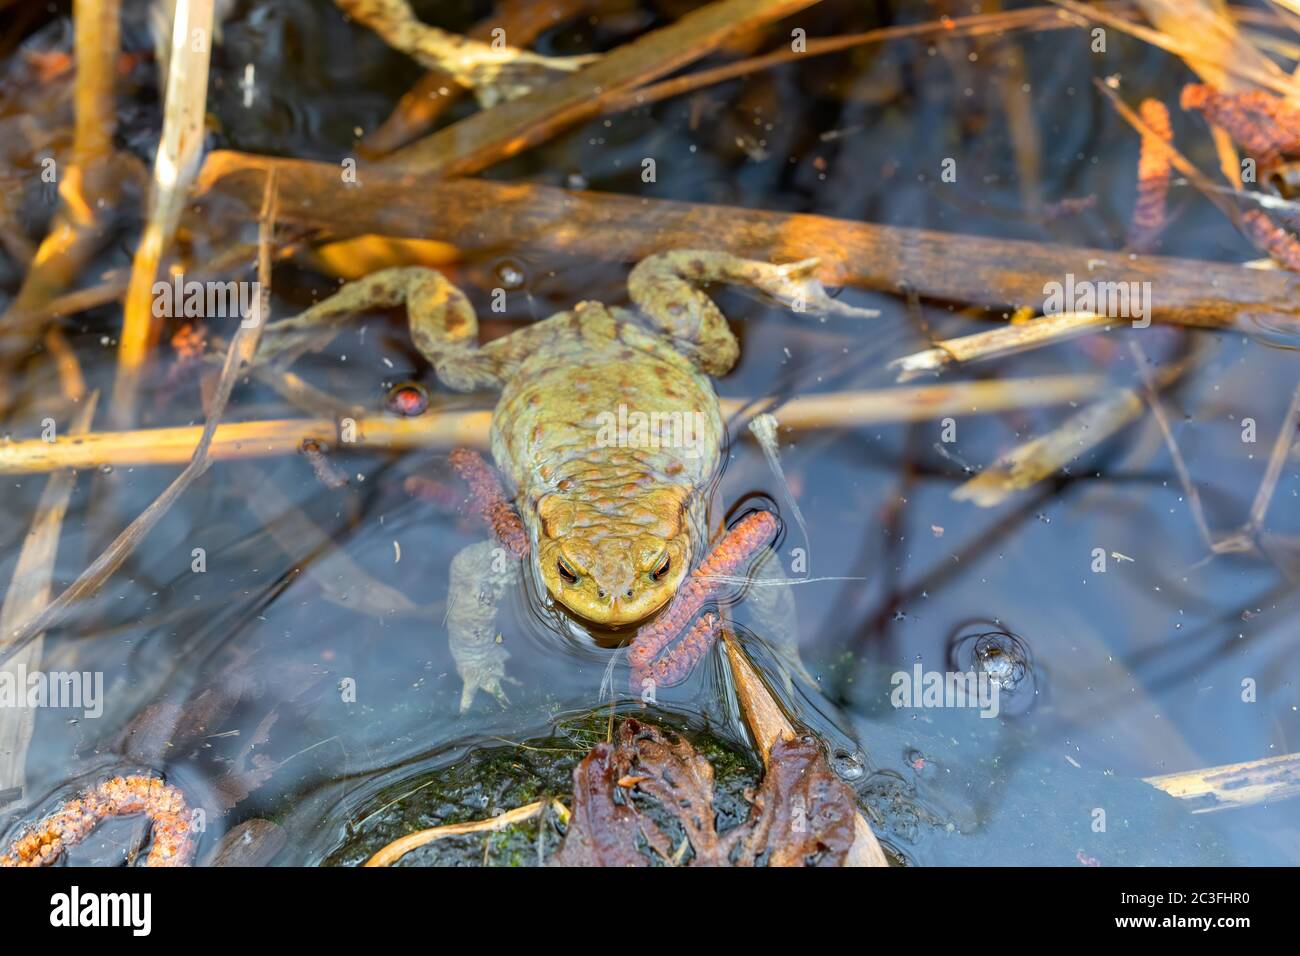 Common toad, Bufo bufo, Czech republic, Europe wildlife Stock Photo